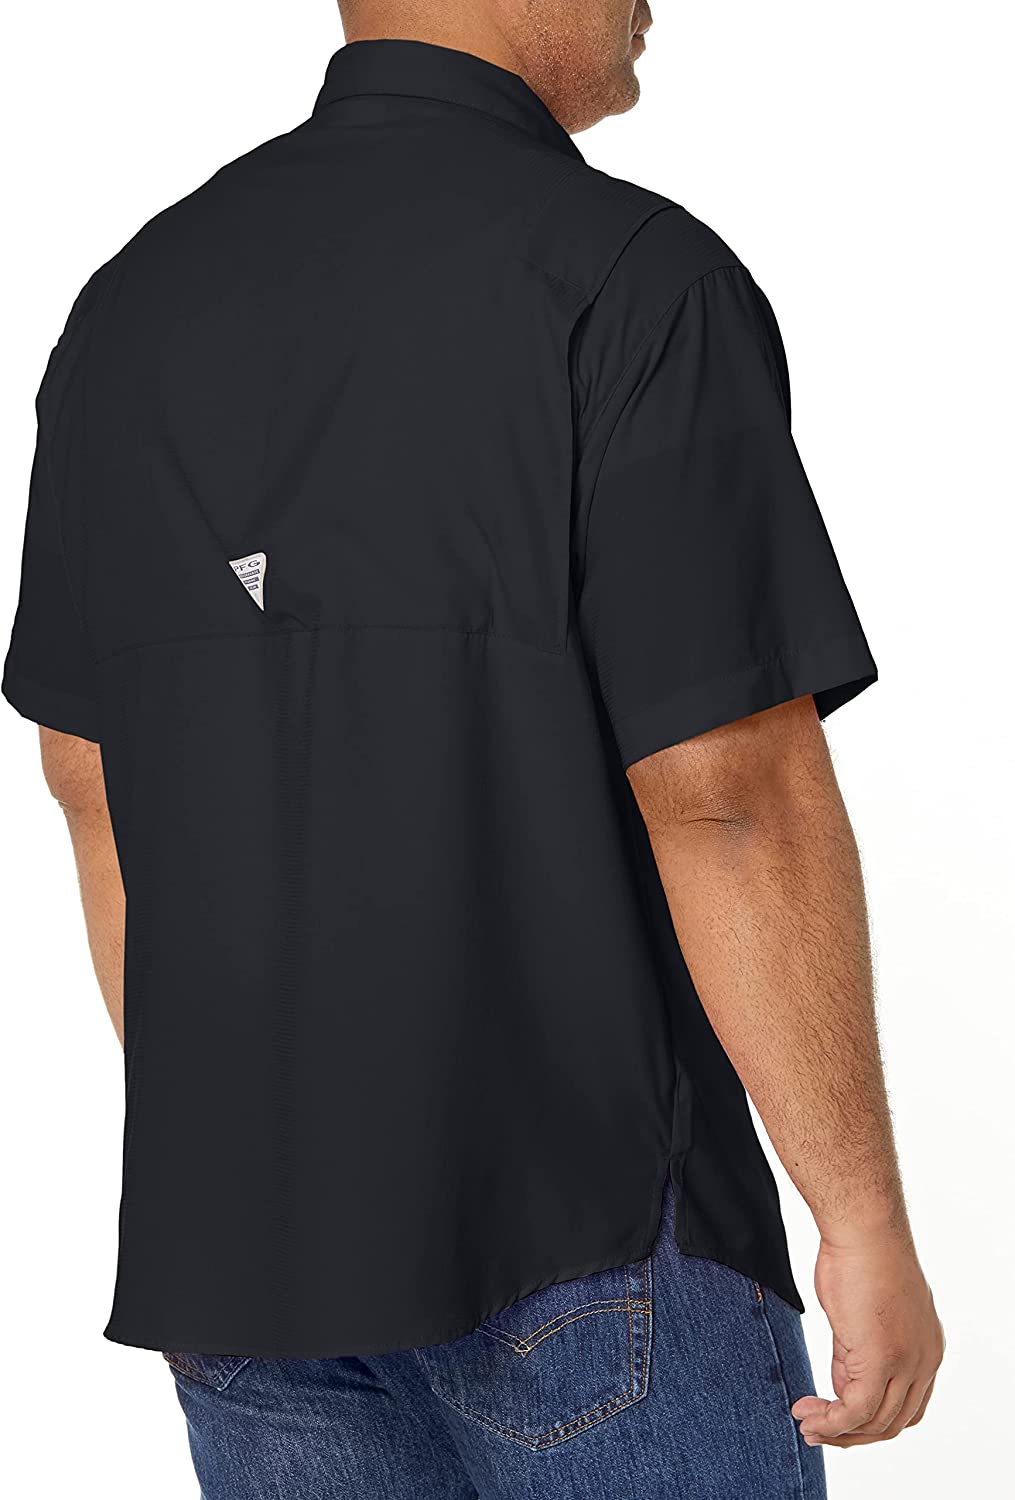 Columbia Men's PFG Tamiami II Shirt - image 2 of 12